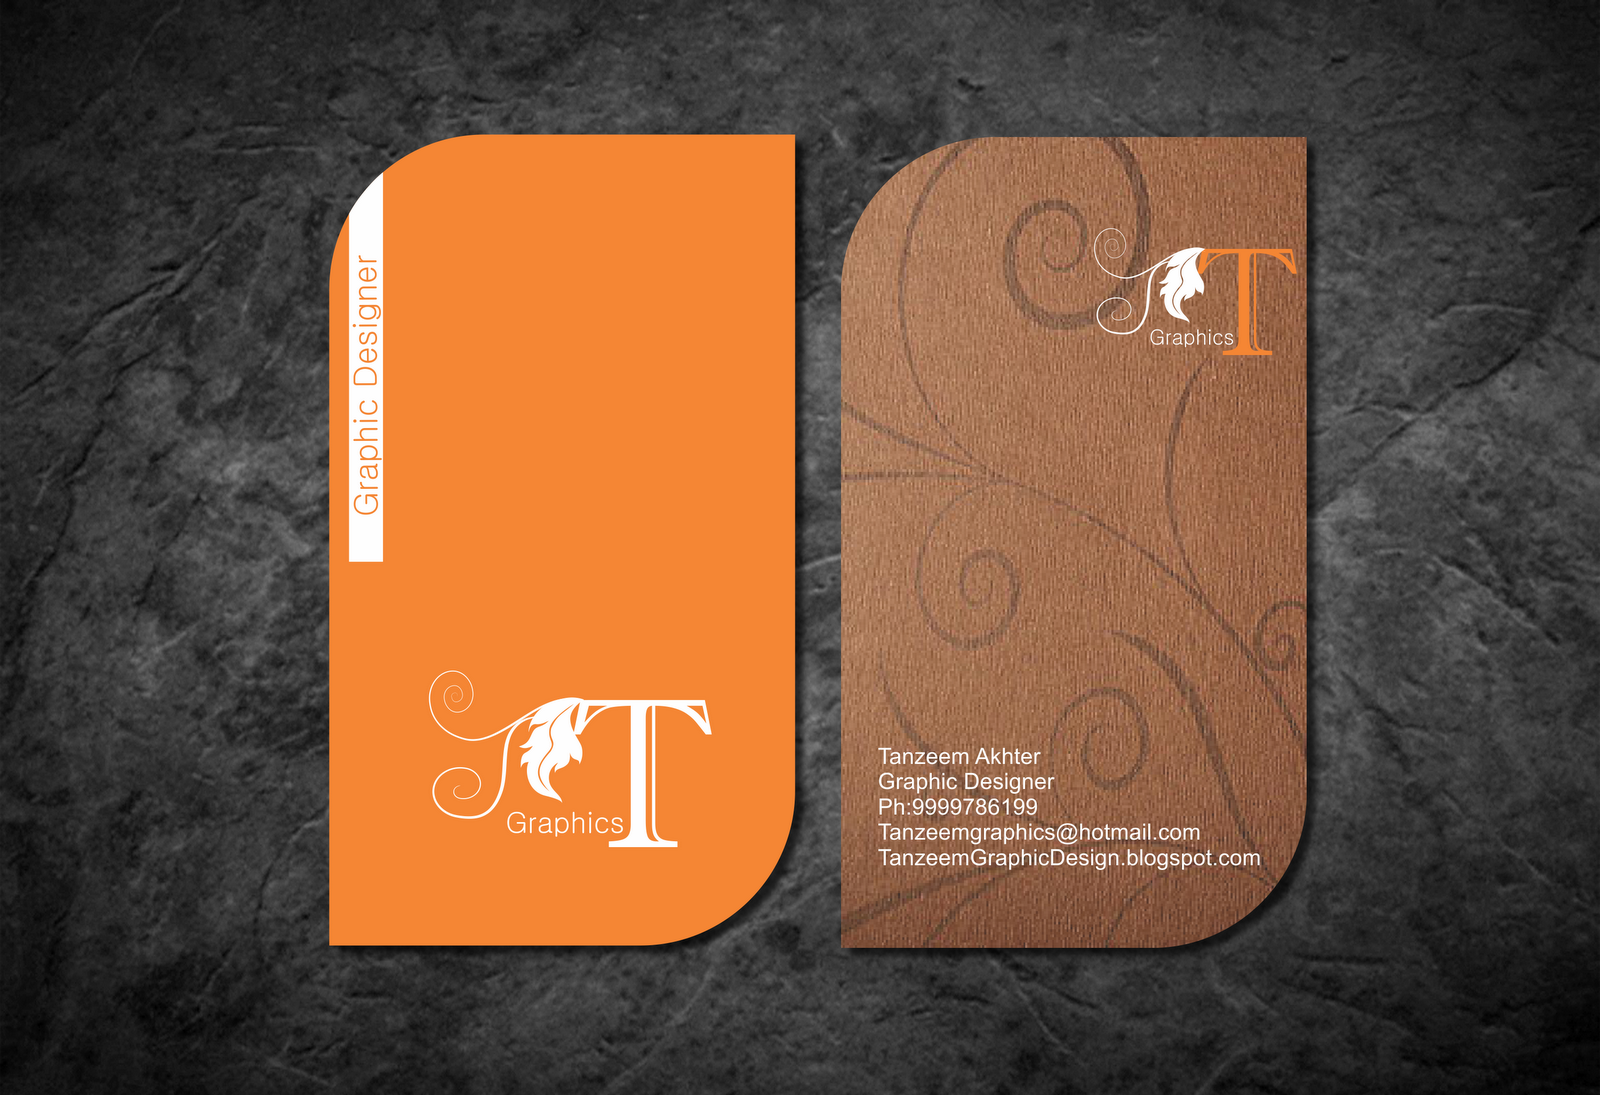 tanzeemgraphicdesigner-logo-visiting-card-in-coreldraw-illustrator